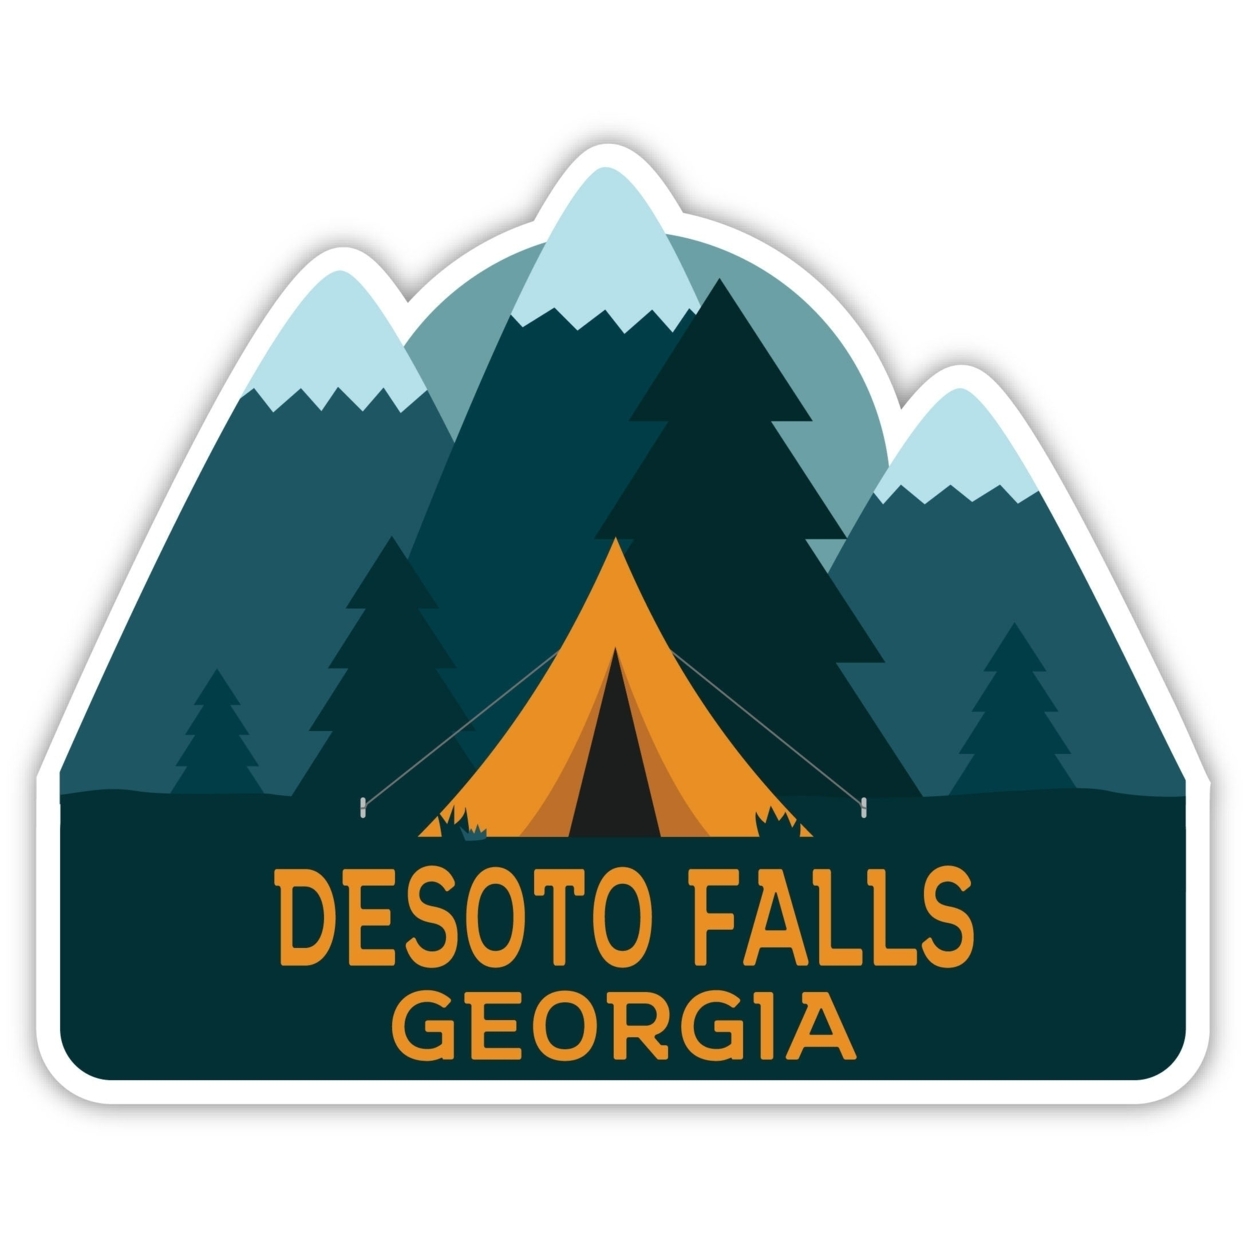 DeSoto Falls Georgia Souvenir Decorative Stickers (Choose Theme And Size) - 4-Pack, 2-Inch, Tent